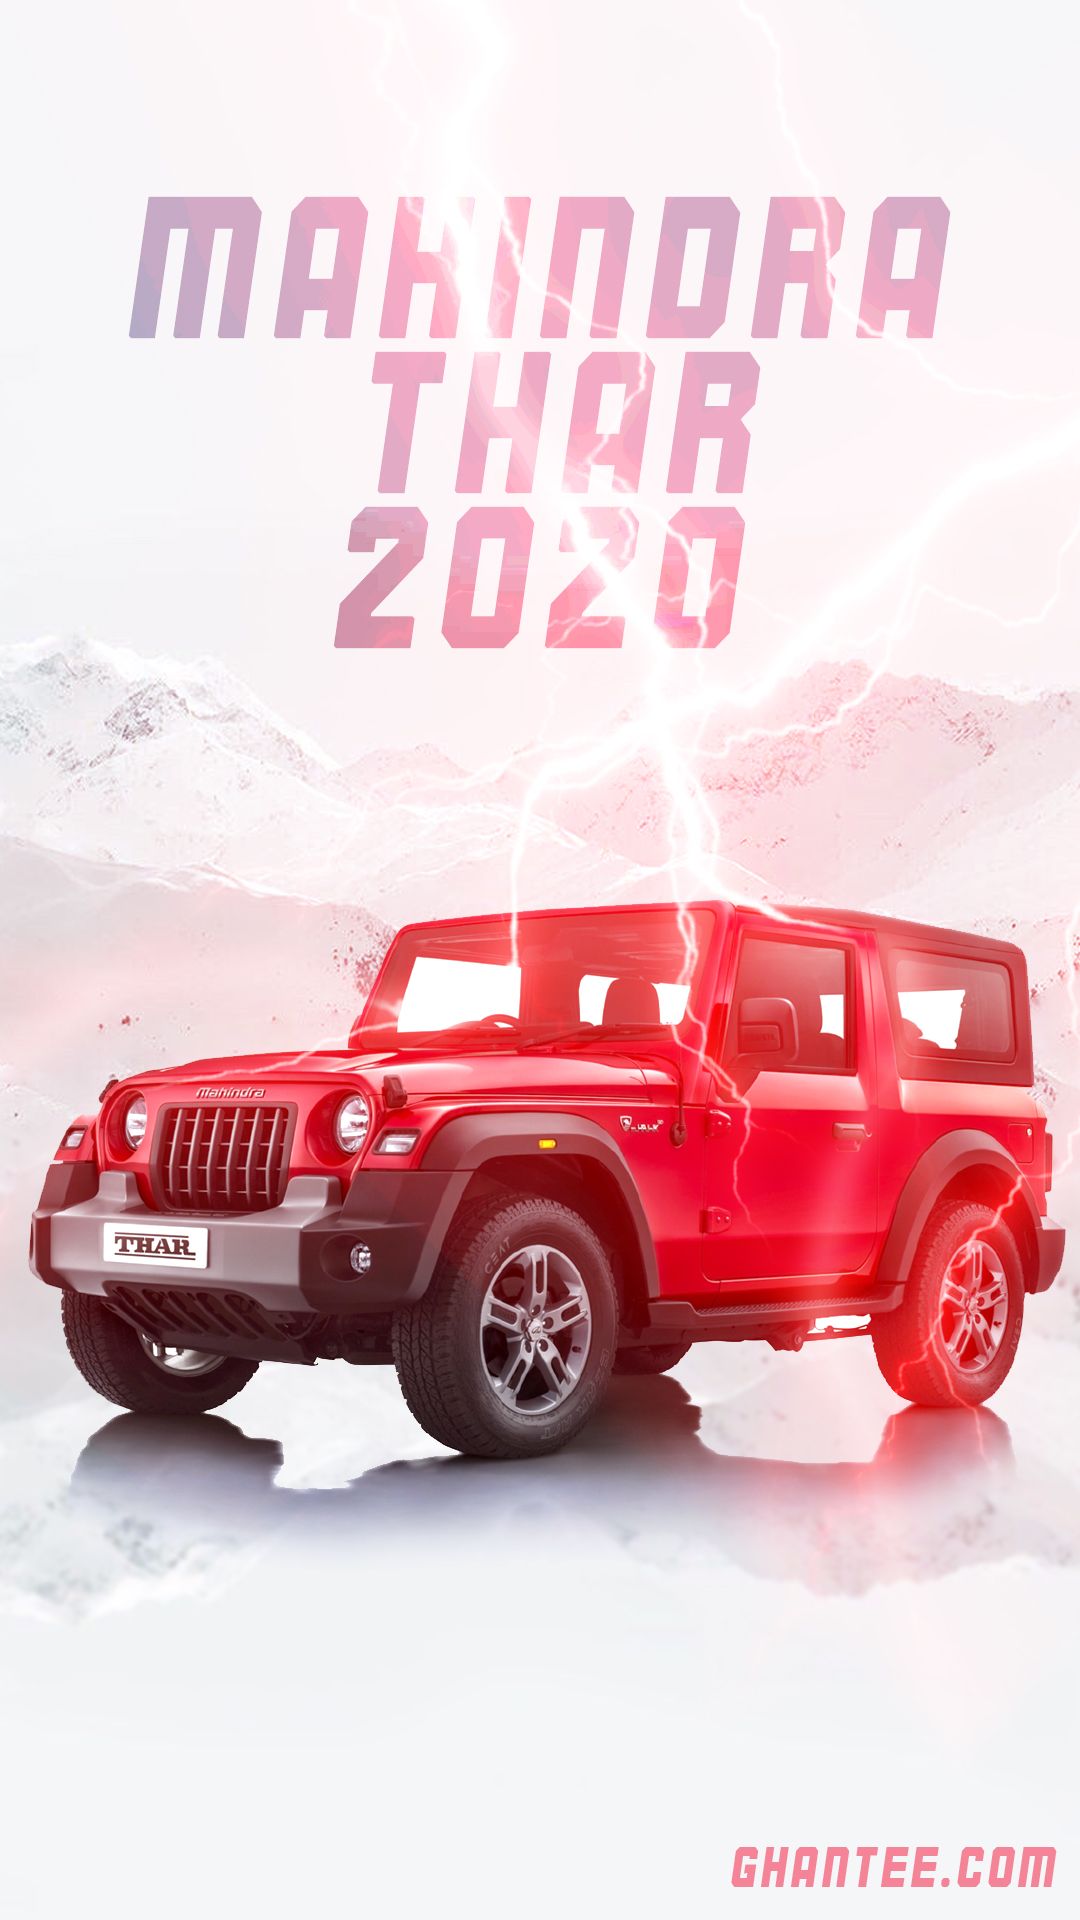 mahindra thar 2020 HD car wallpaper for phone